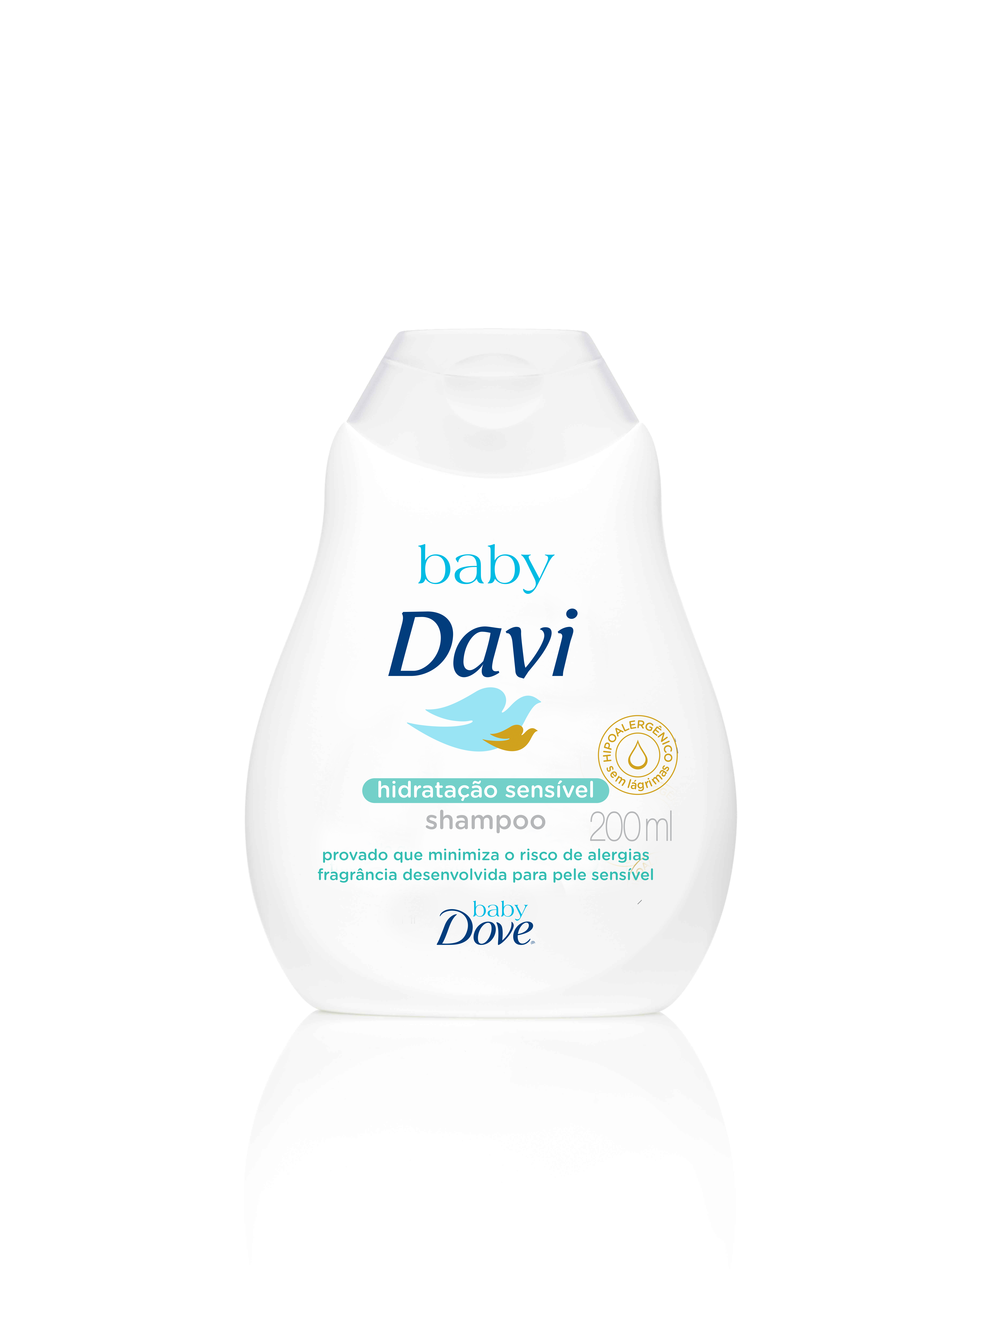 Baby Dove - Davi